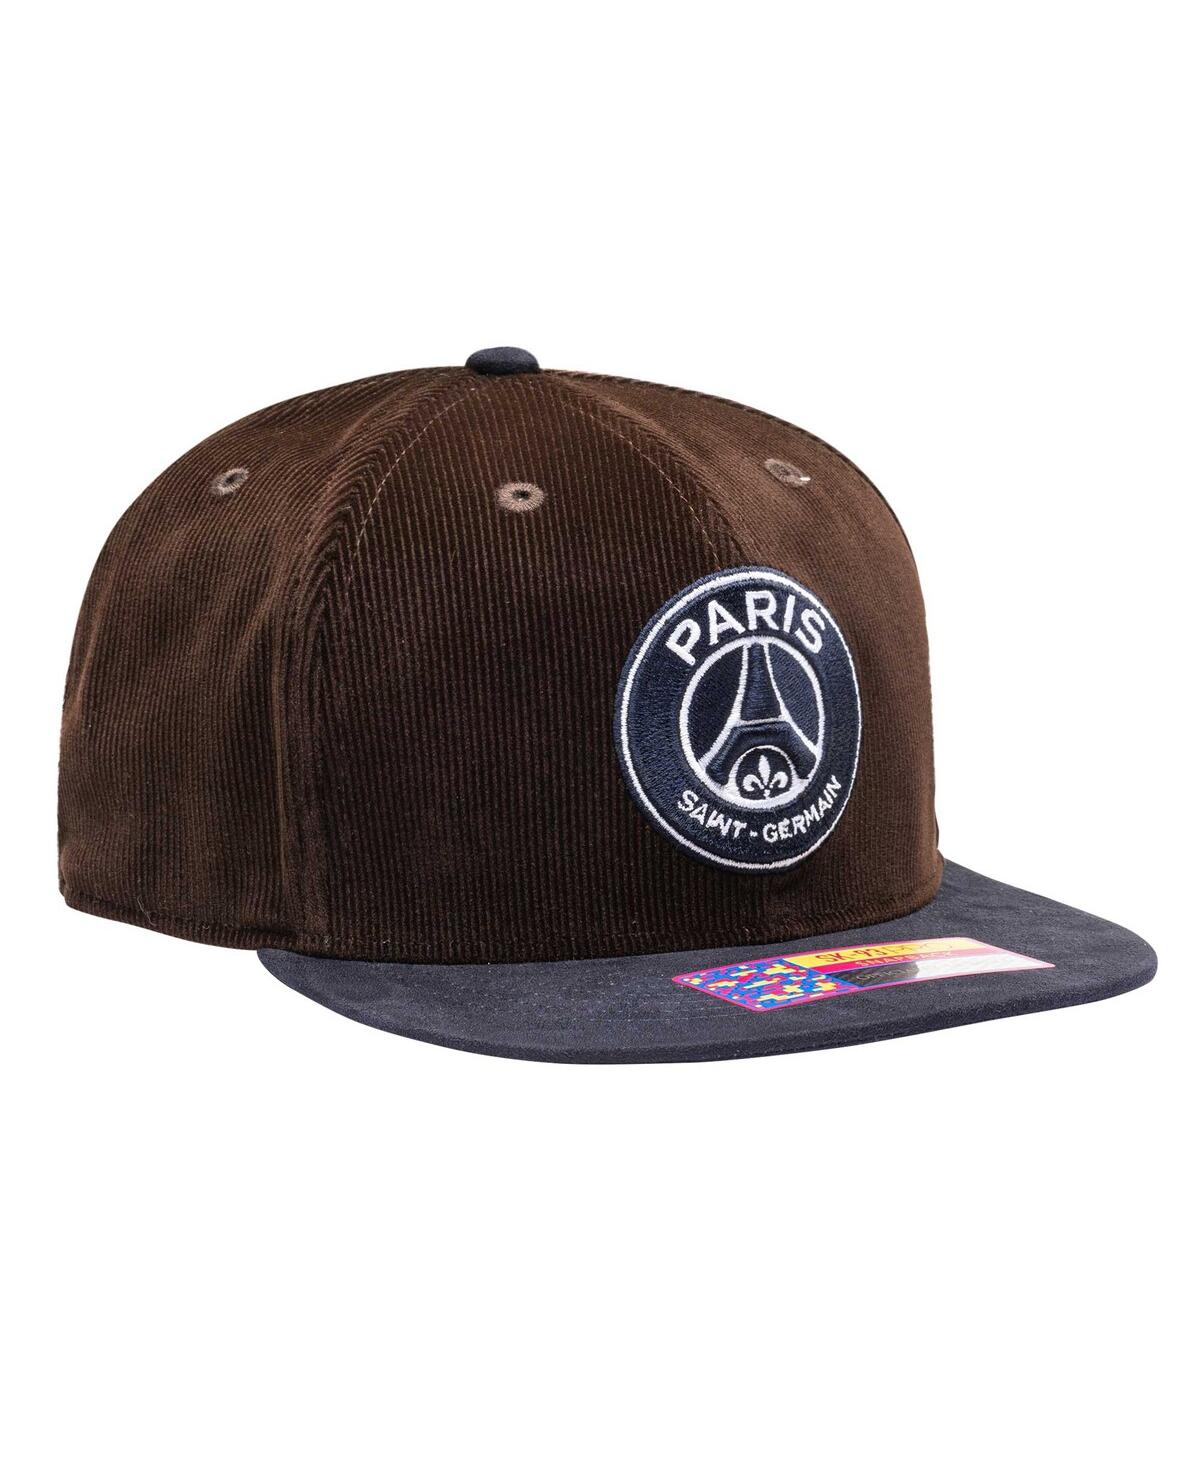 Shop Fan Ink Men's Brown Paris Saint-germain Cognac Snapback Hat